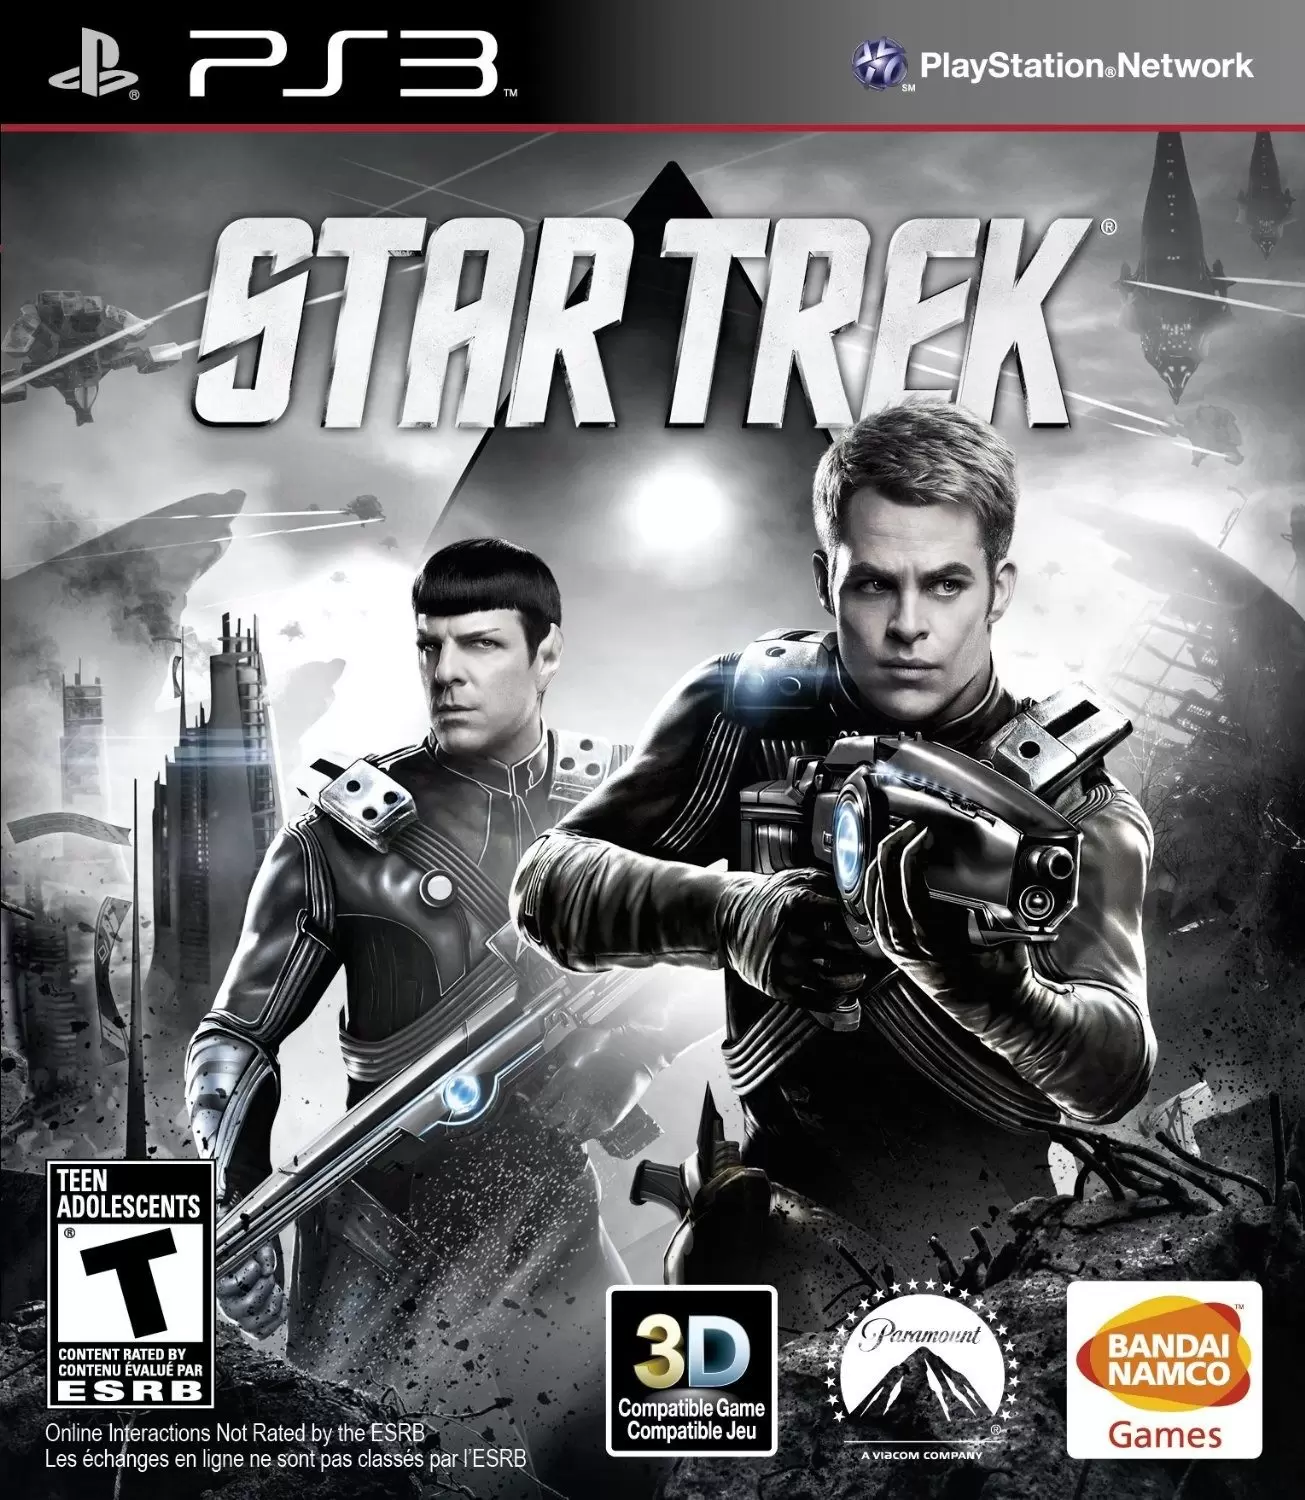 PS3 Games - Star Trek